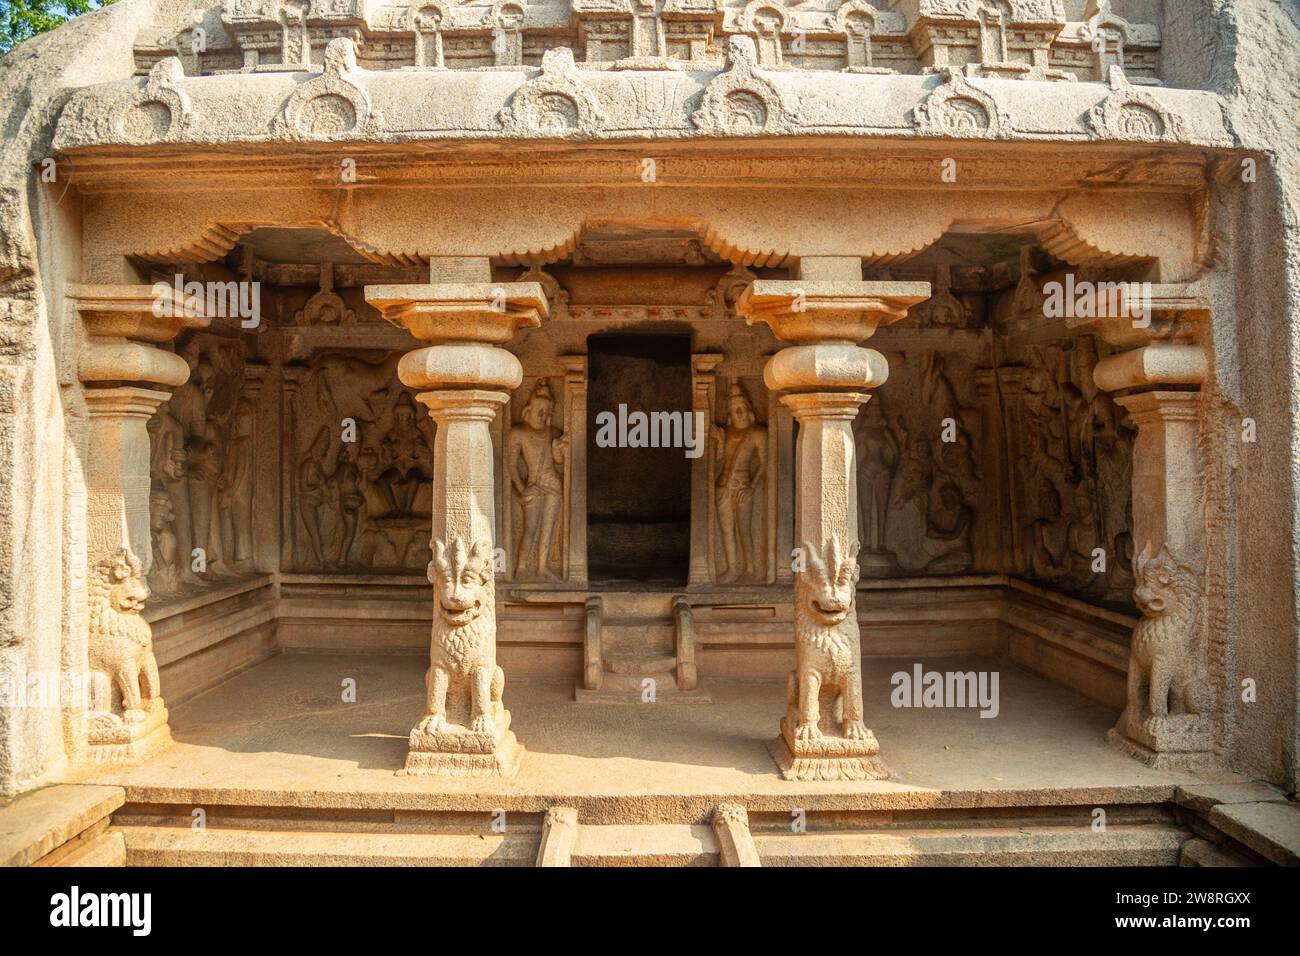 Tempio scavato nella roccia di Varaha con antiche statue decorate, Mahabalipuram, regione di Tondaimandalam, Tamil Nadu, India meridionale Foto Stock